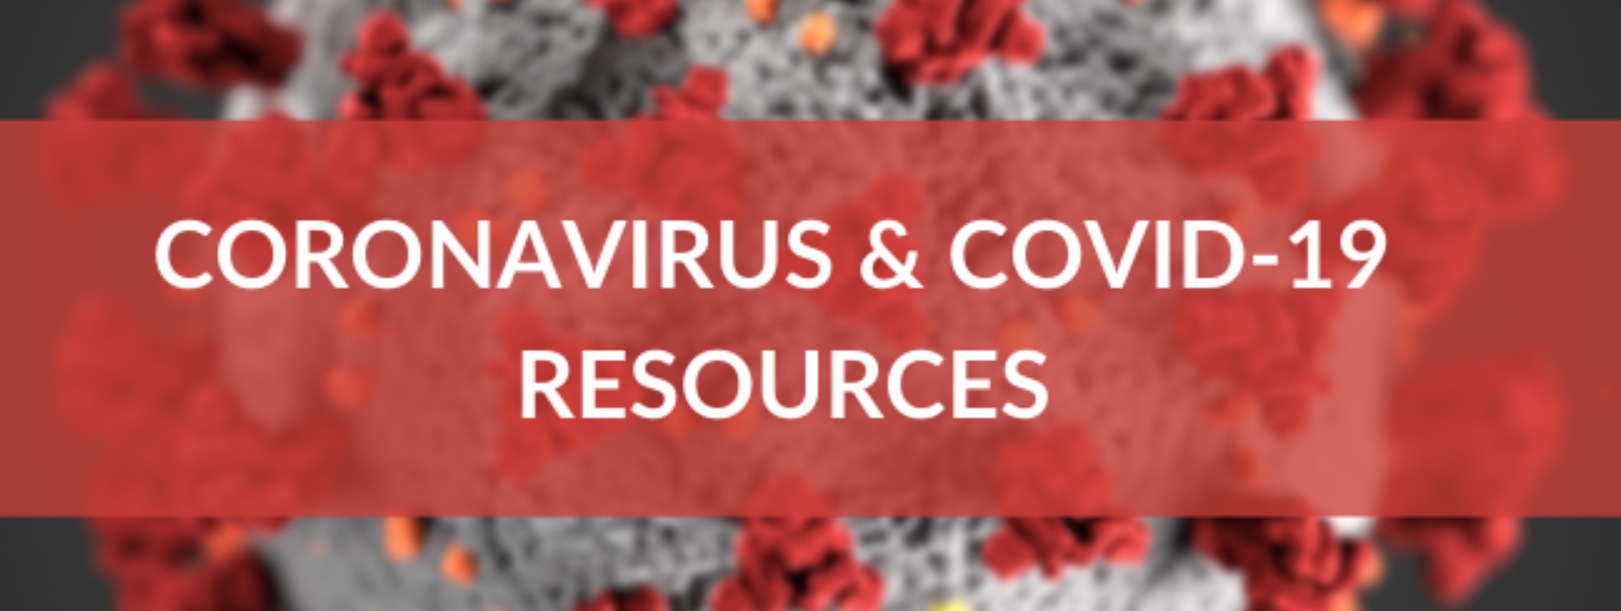 Coronavirus and Covid-19 resources